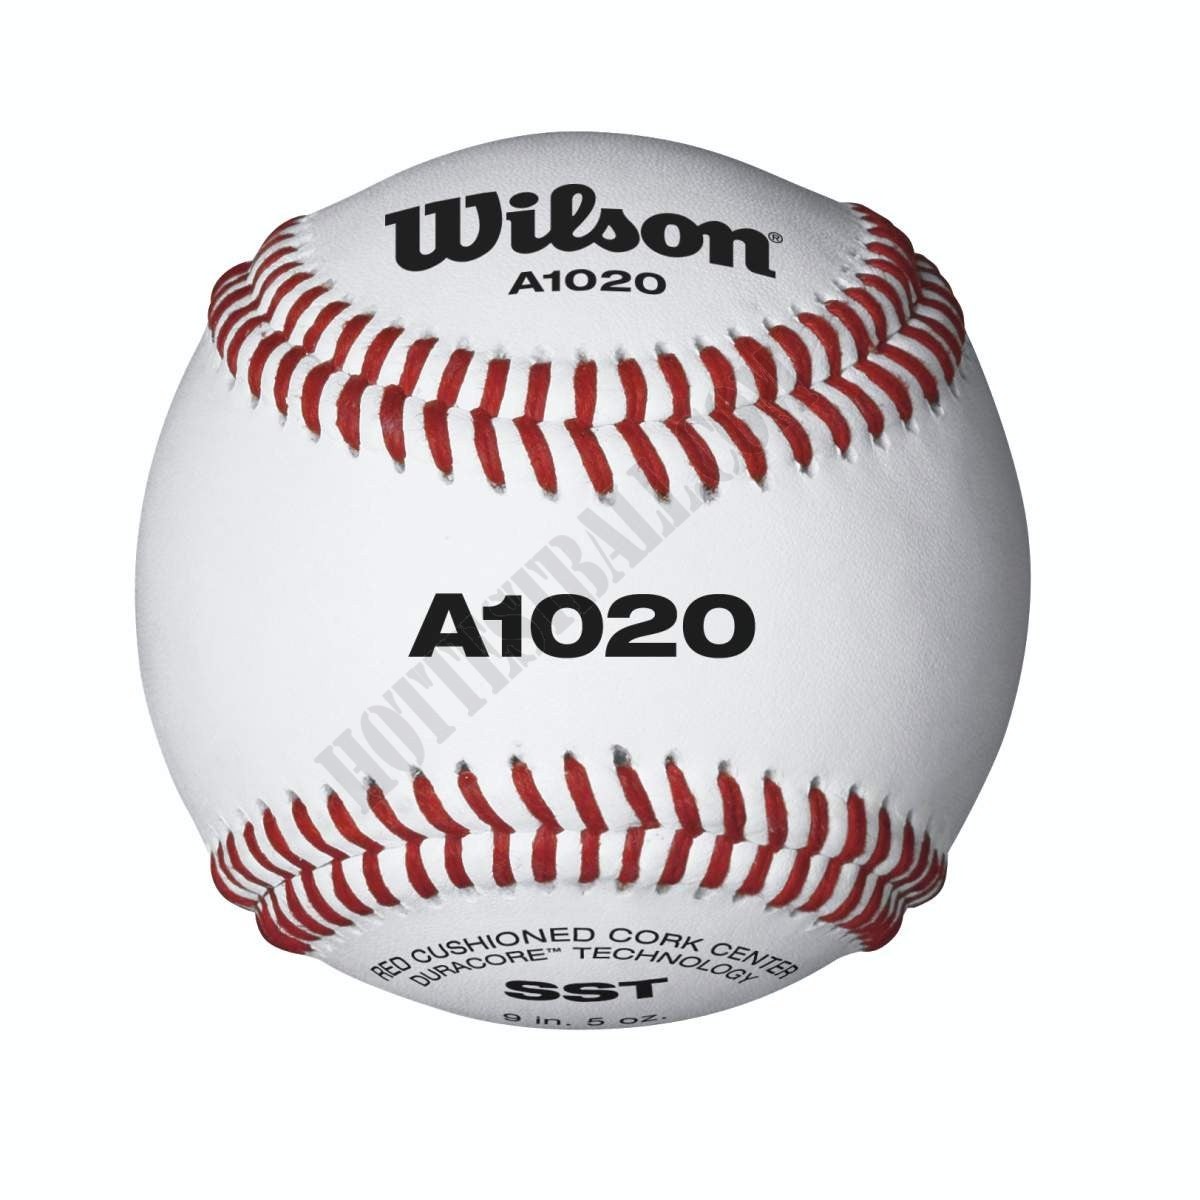 A1020 Champion Series SST Baseballs - Wilson Discount Store - A1020 Champion Series SST Baseballs - Wilson Discount Store